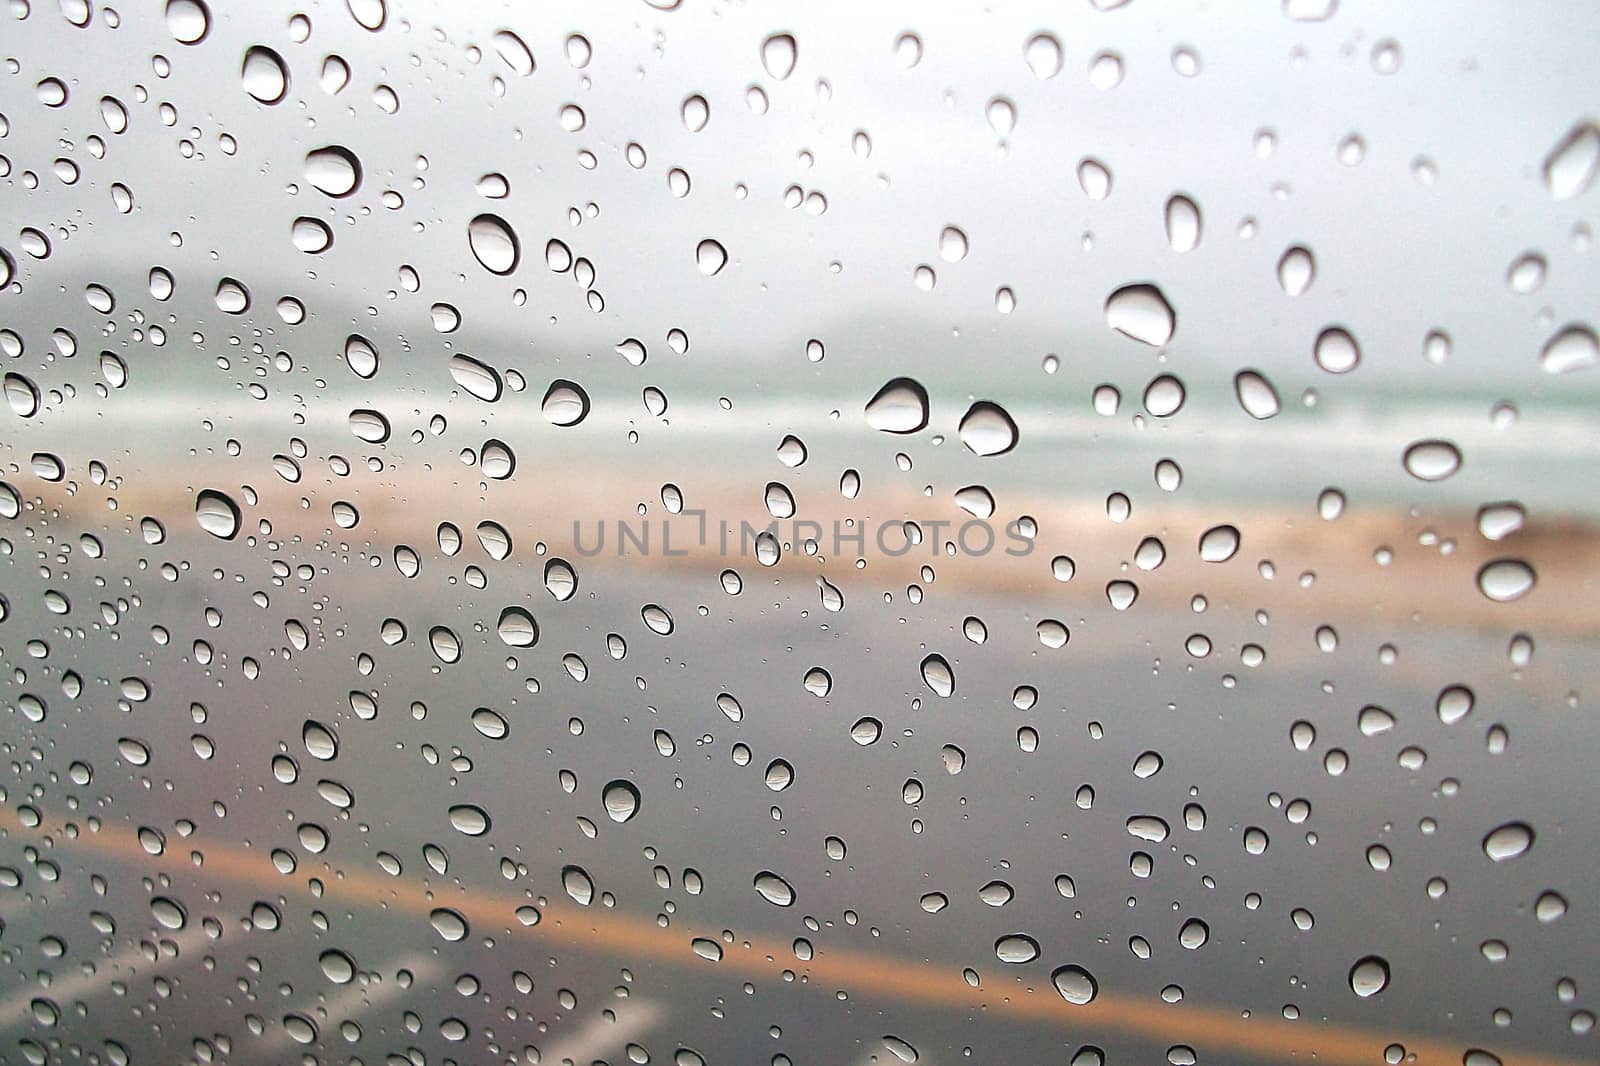 Droplet glass rain background, droplet glass rain wallpaper